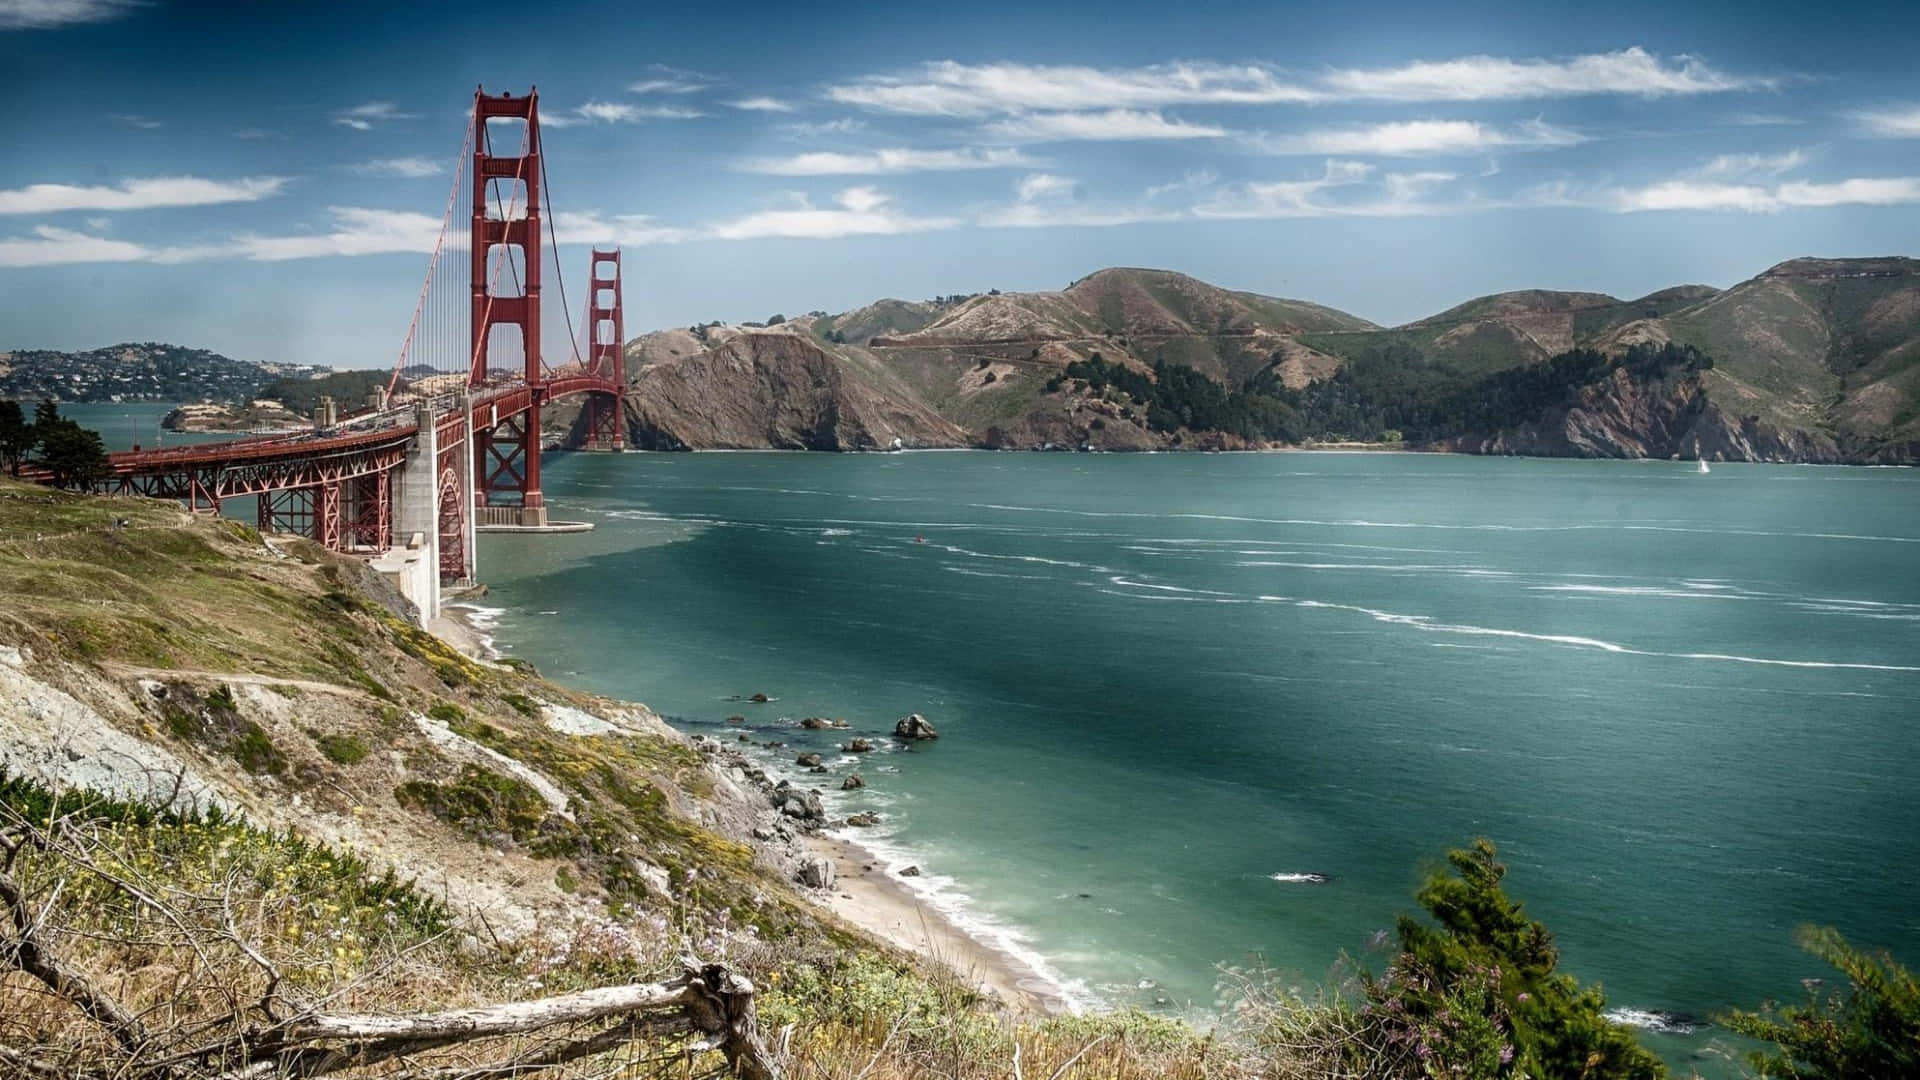 California 4k Golden State Bridge Wallpaper